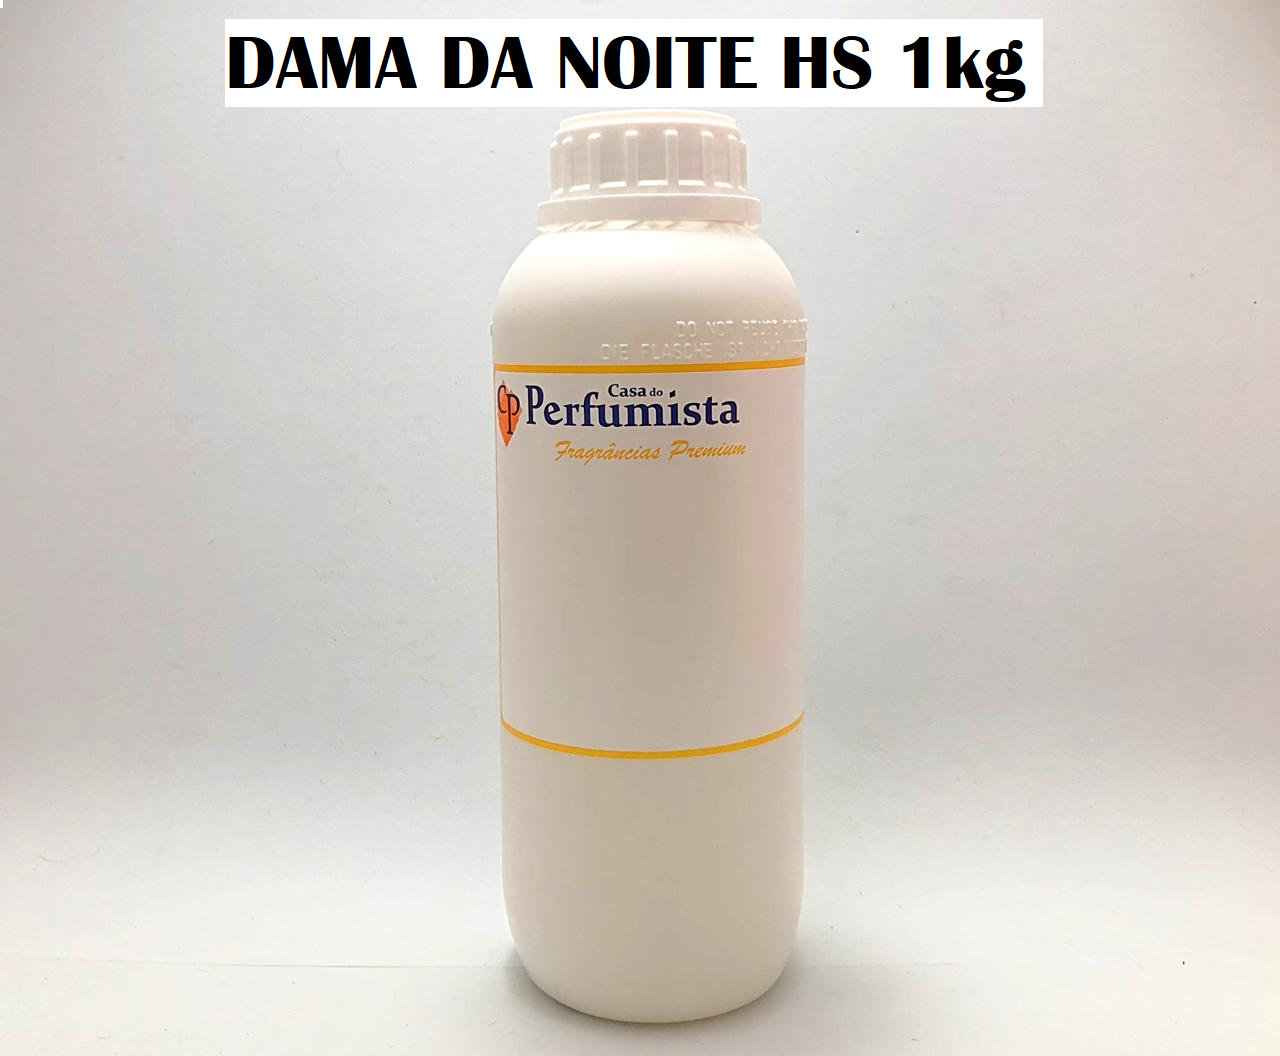 DAMA DA NOITE HS - 1kg